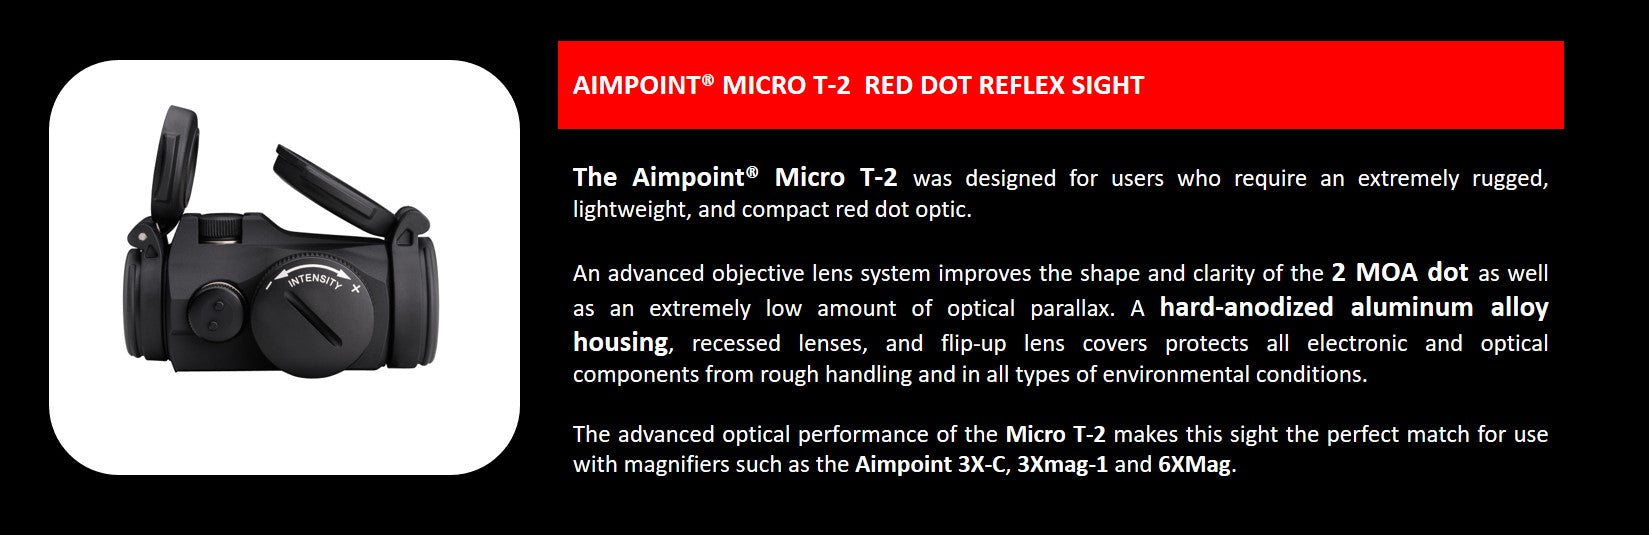 Micro T-2 Red Dot Reflex Sight 2 MOA No Mount - 200180